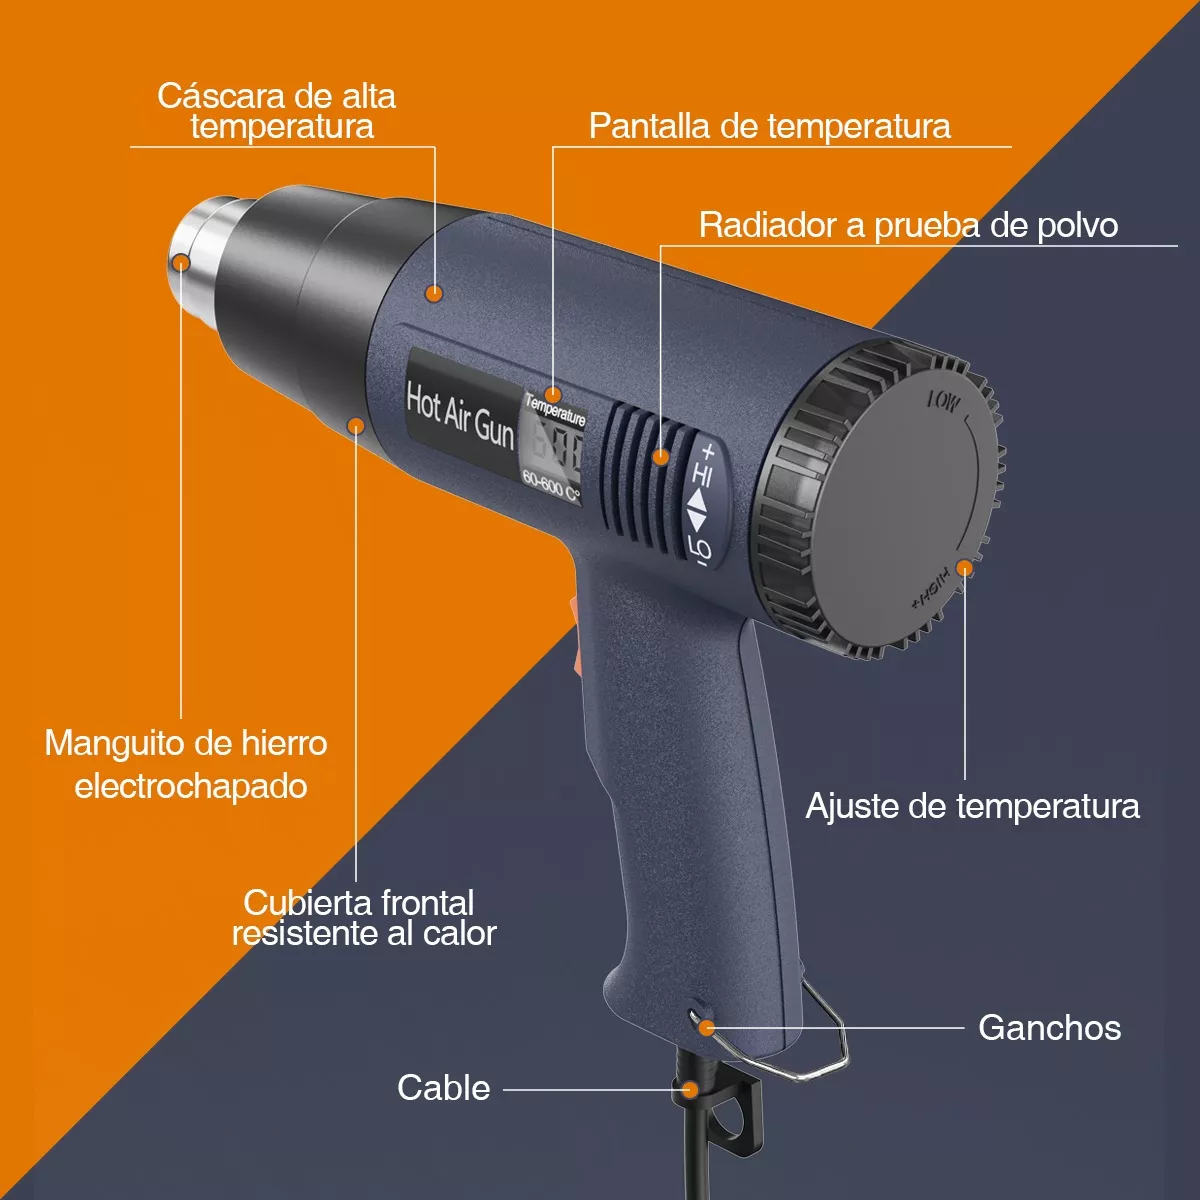 Pistola Calor 2000w Pantalla Digital Lateral, Temperatura